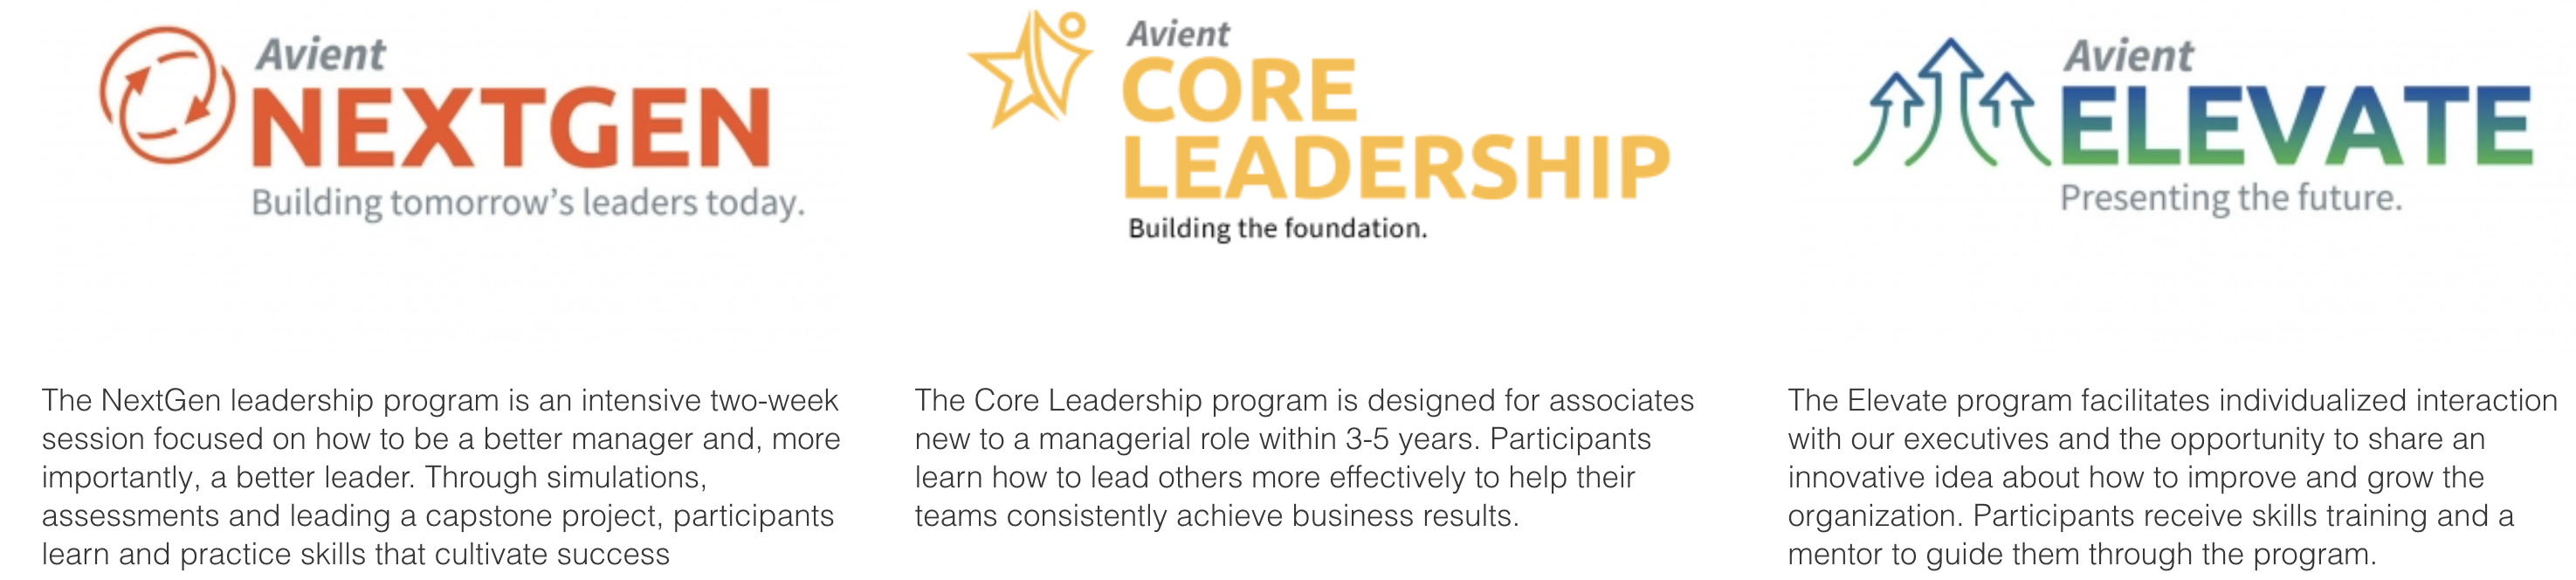 Leadership Programs